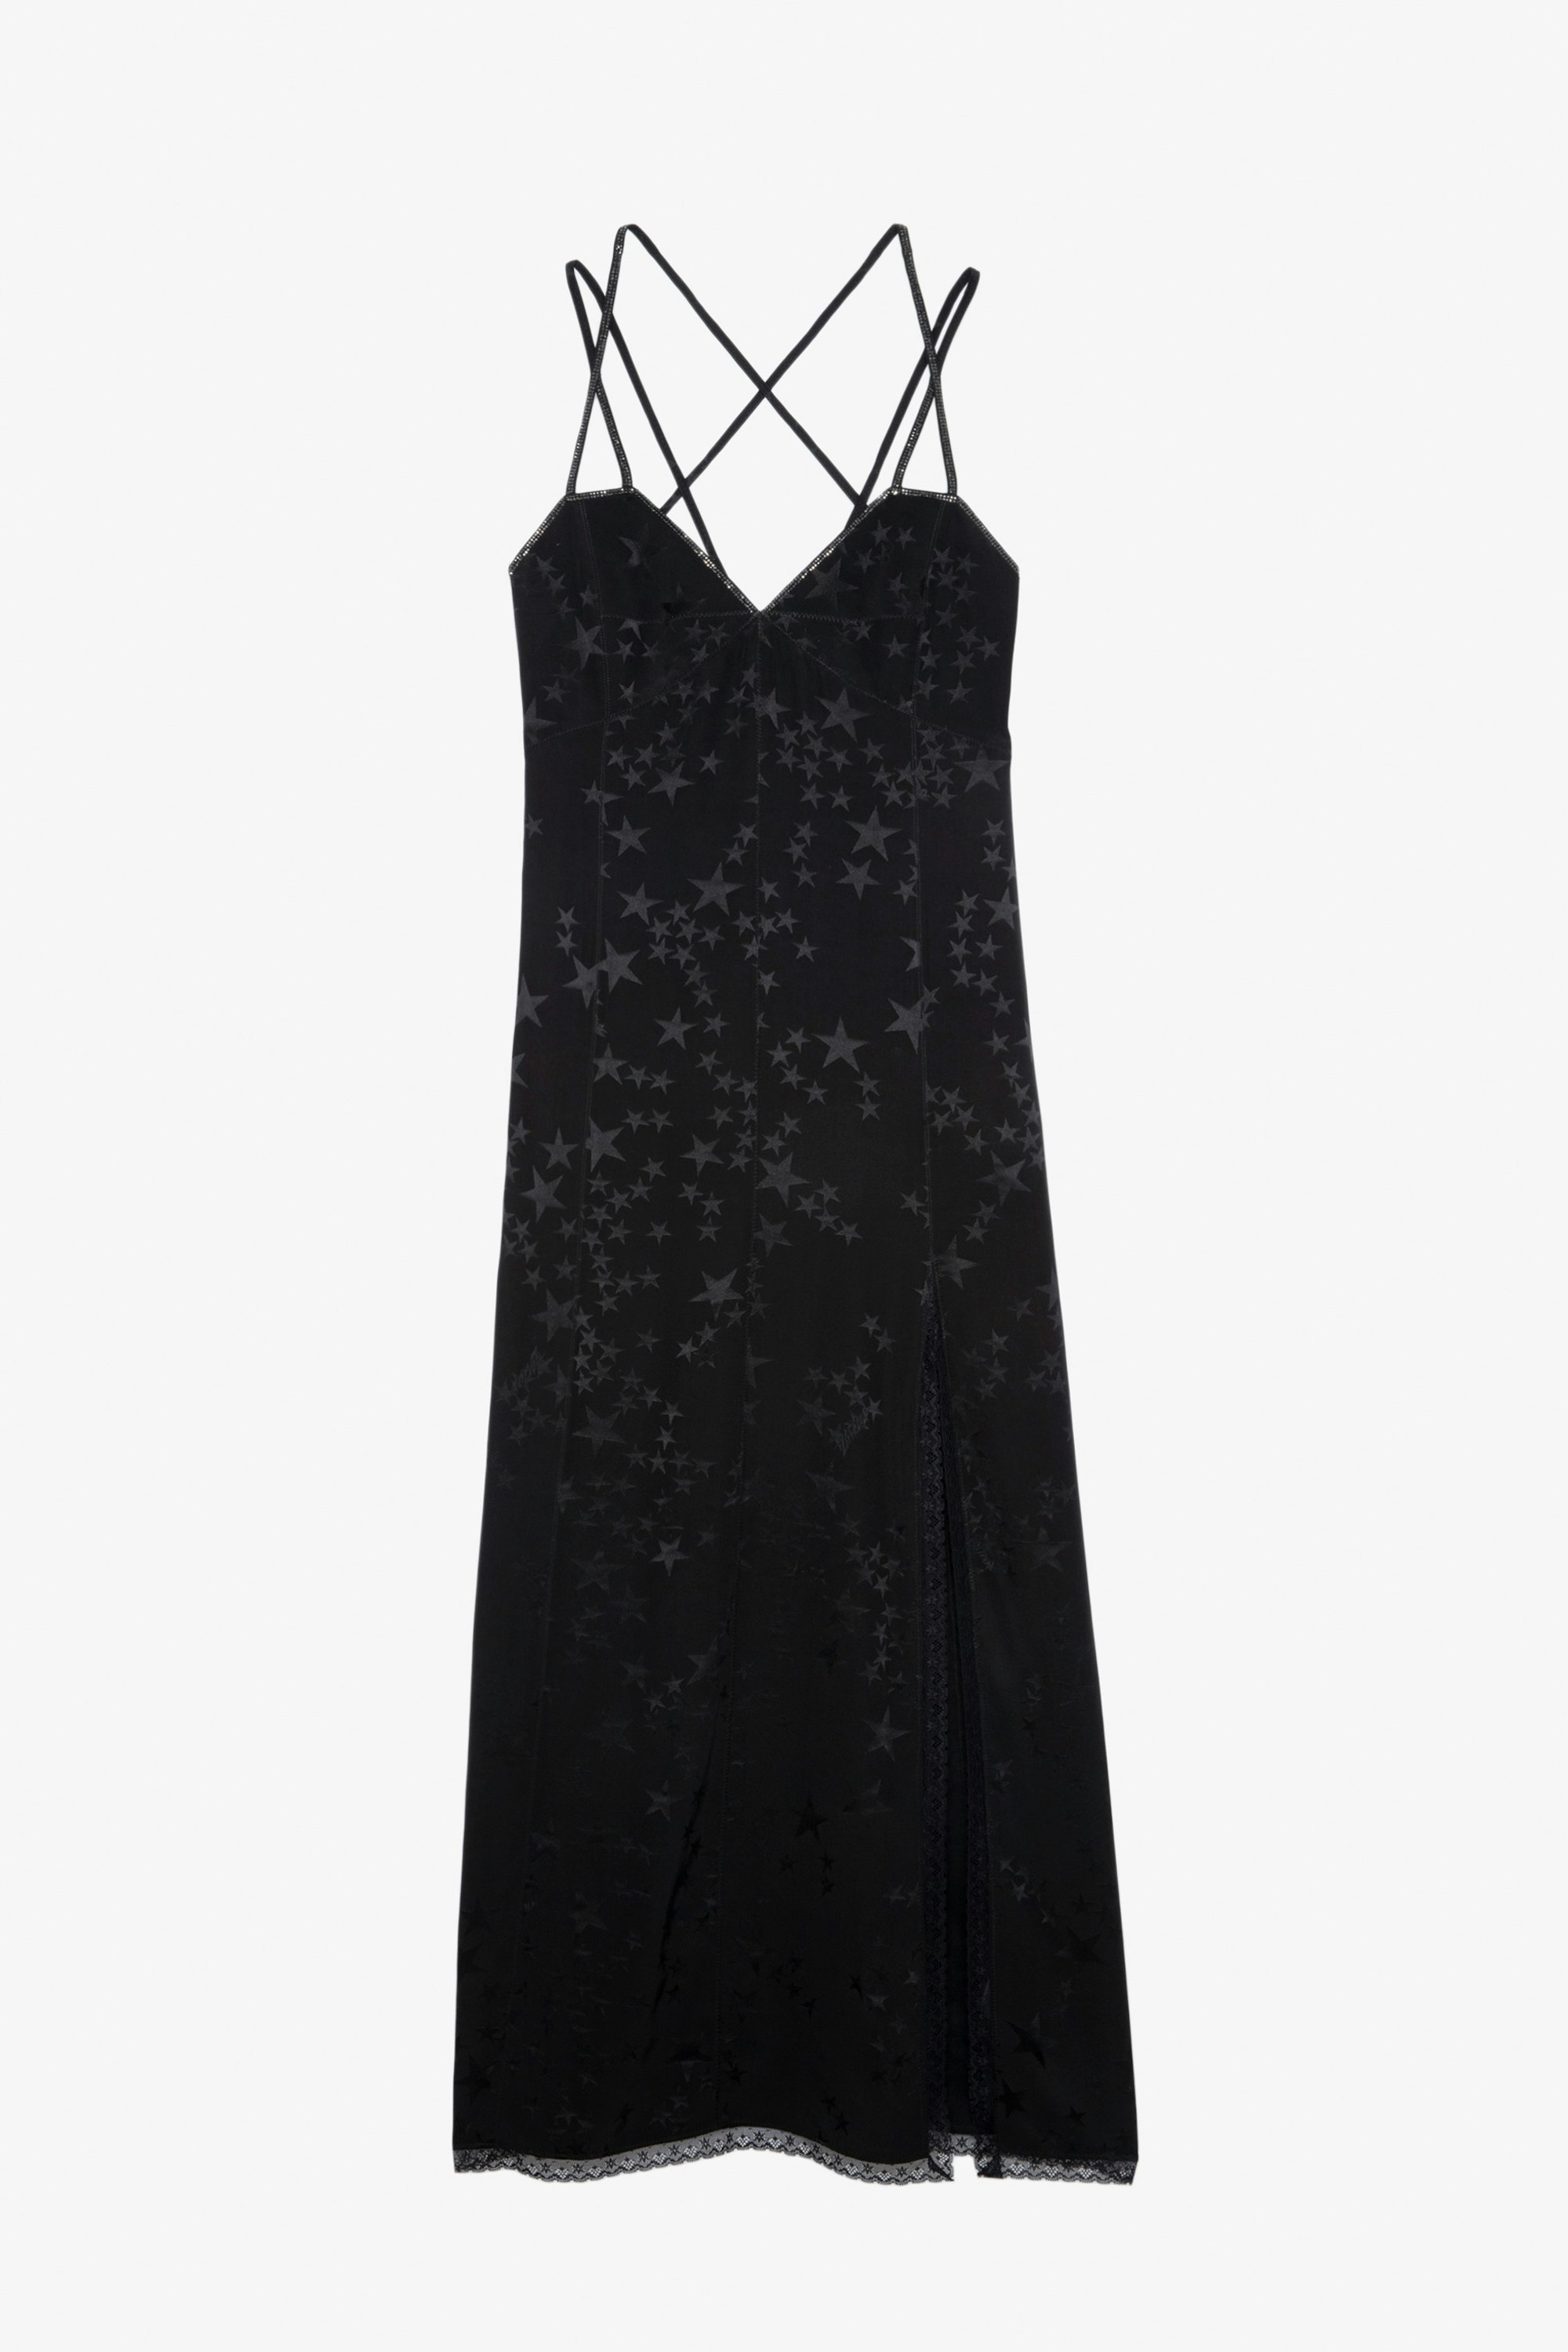 Rohal Silk Jacquard Dress - Women’s long black silk lingerie-style dress with jacquard stars, diamanté-embellished crossover straps and lace hem.